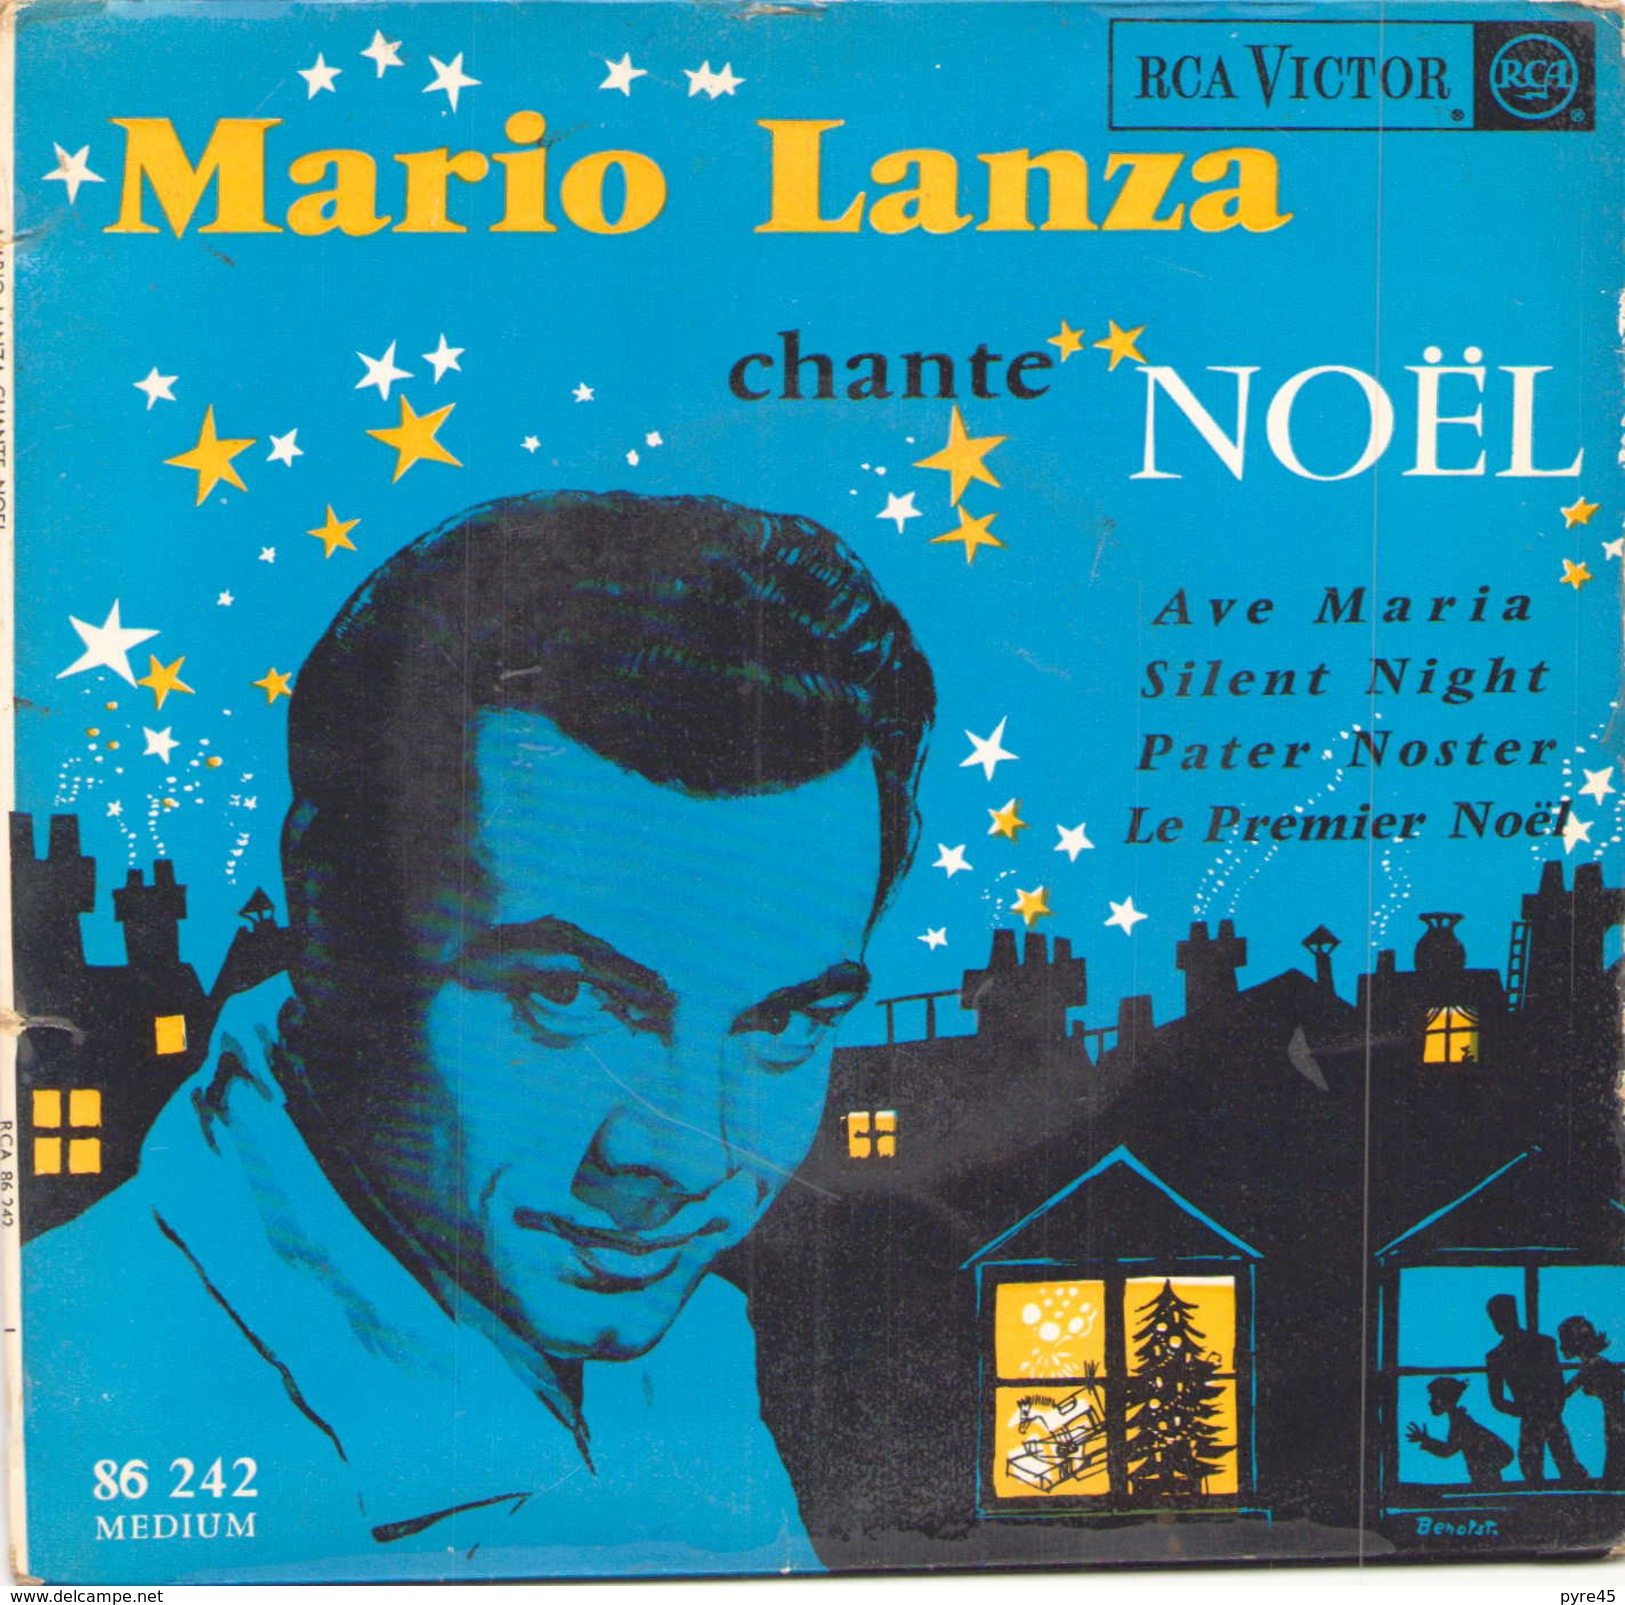 45 TOURS EP MARIO LANZA CHANTE NOEL AVE MARIA / SILENT NIGHT / PATER NOSTER / LE PREMIER NOEL RCA 86242 - Chants De Noel